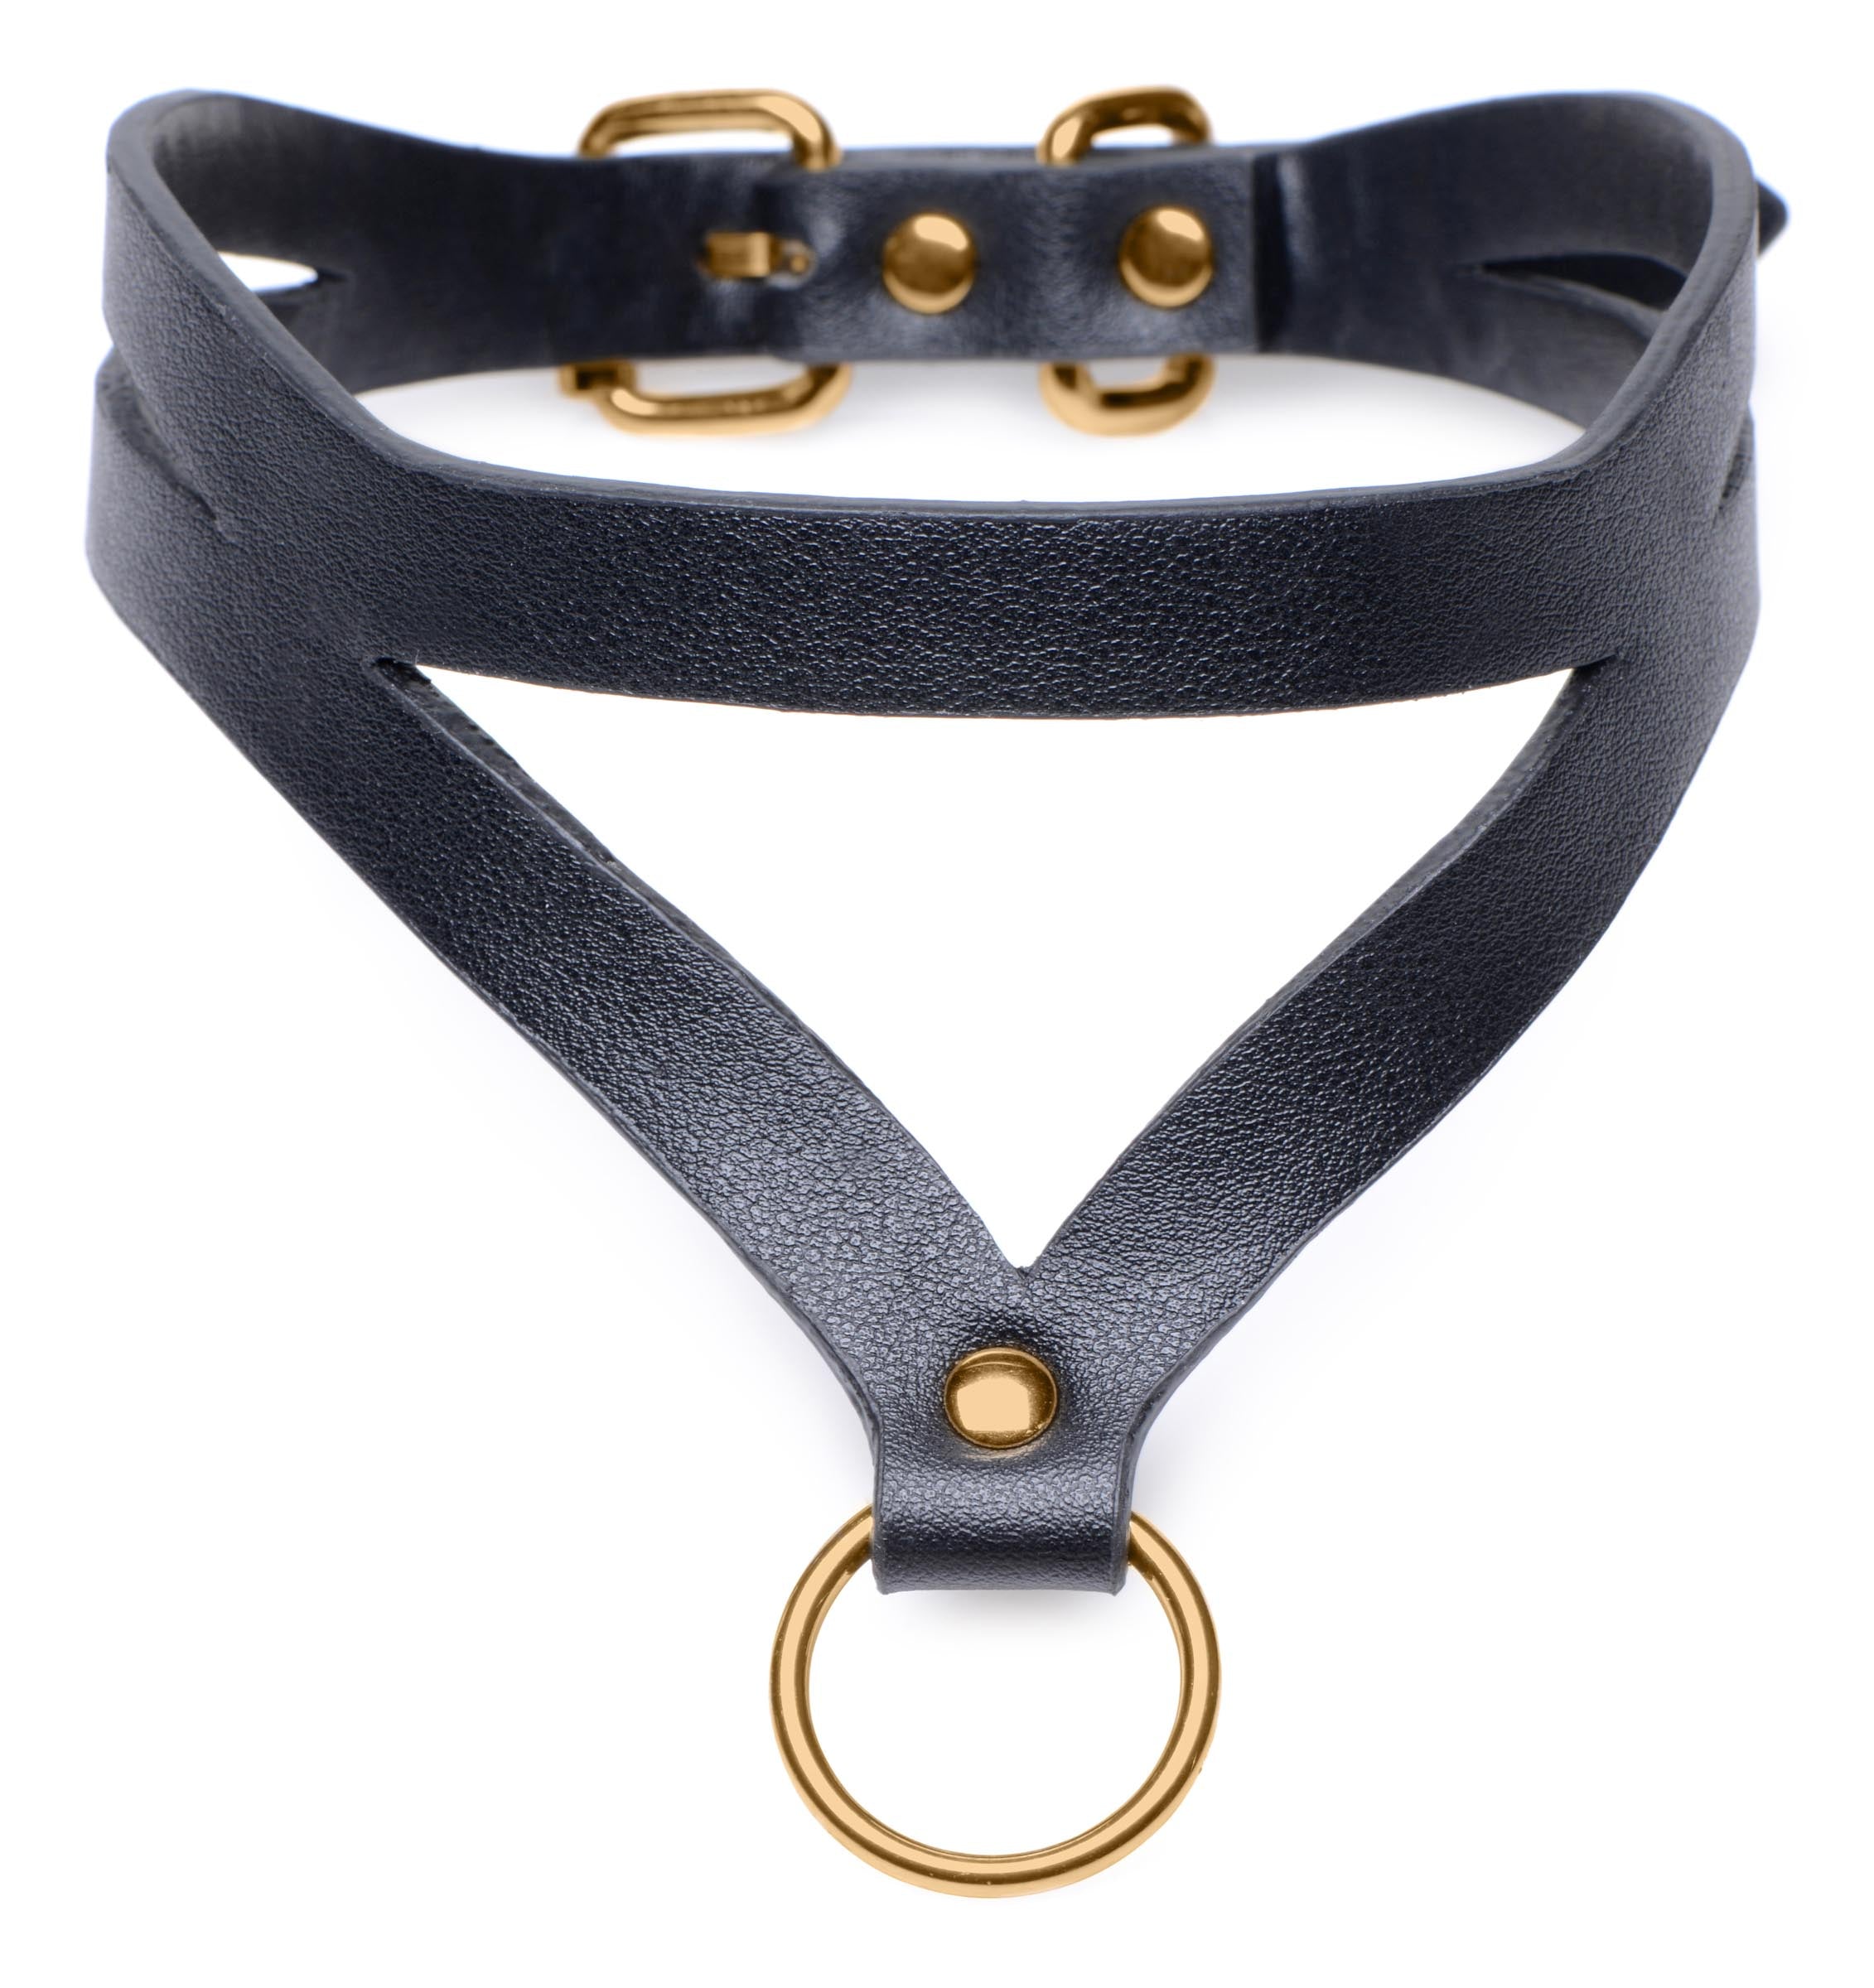 Bondage Baddie Black and Gold Collar with O-Ring